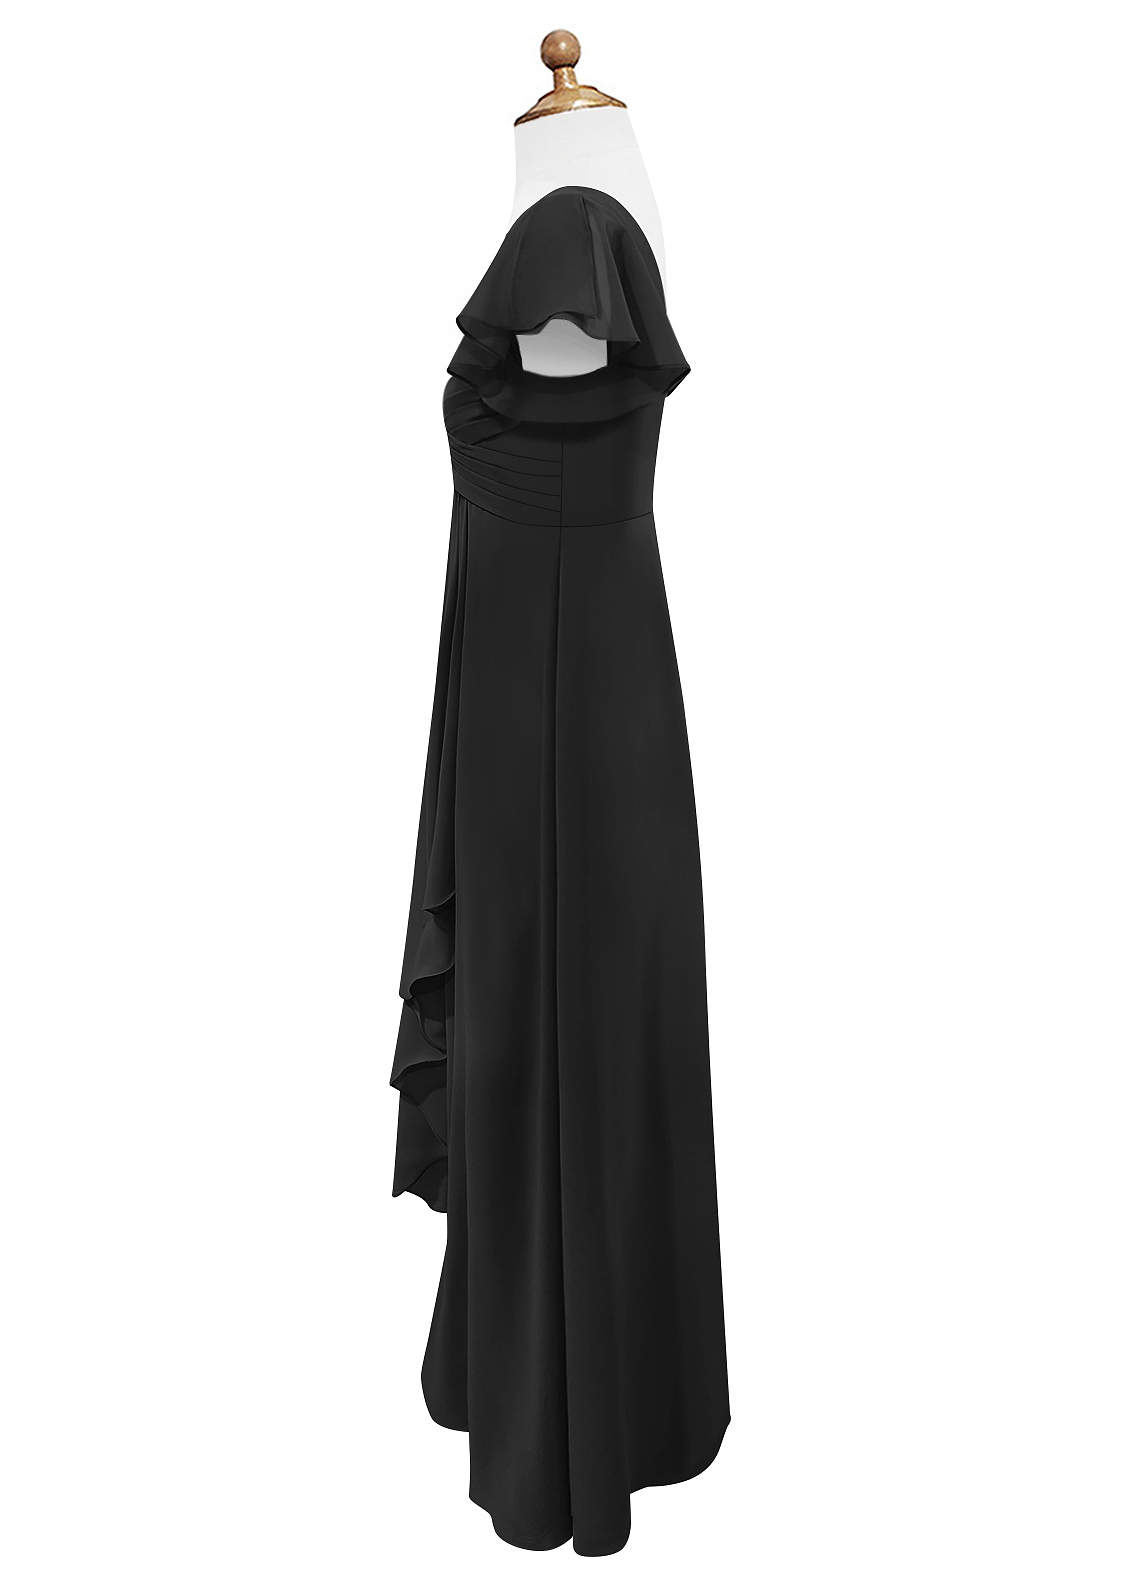 Azazie Omari A-Line Ruched Chiffon Floor-Length Junior Bridesmaid Dress image1